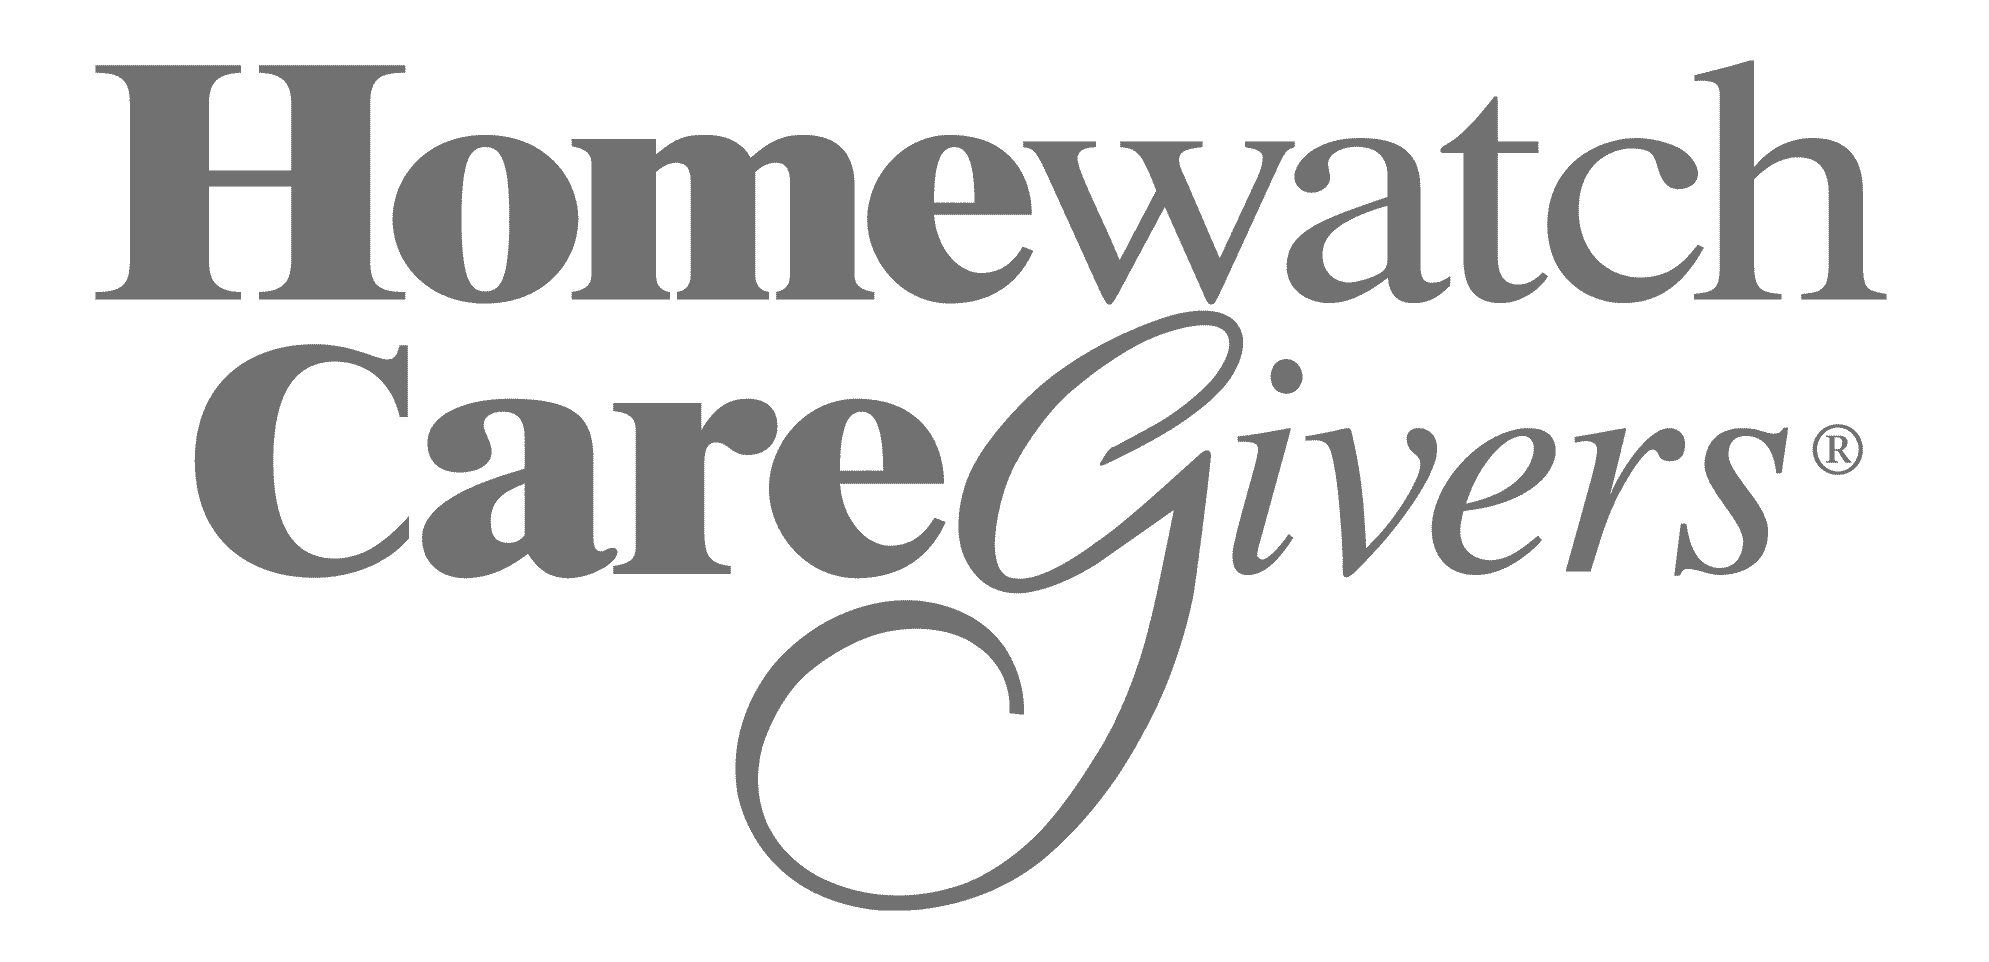 Homewatch-Caregivers-bw.png